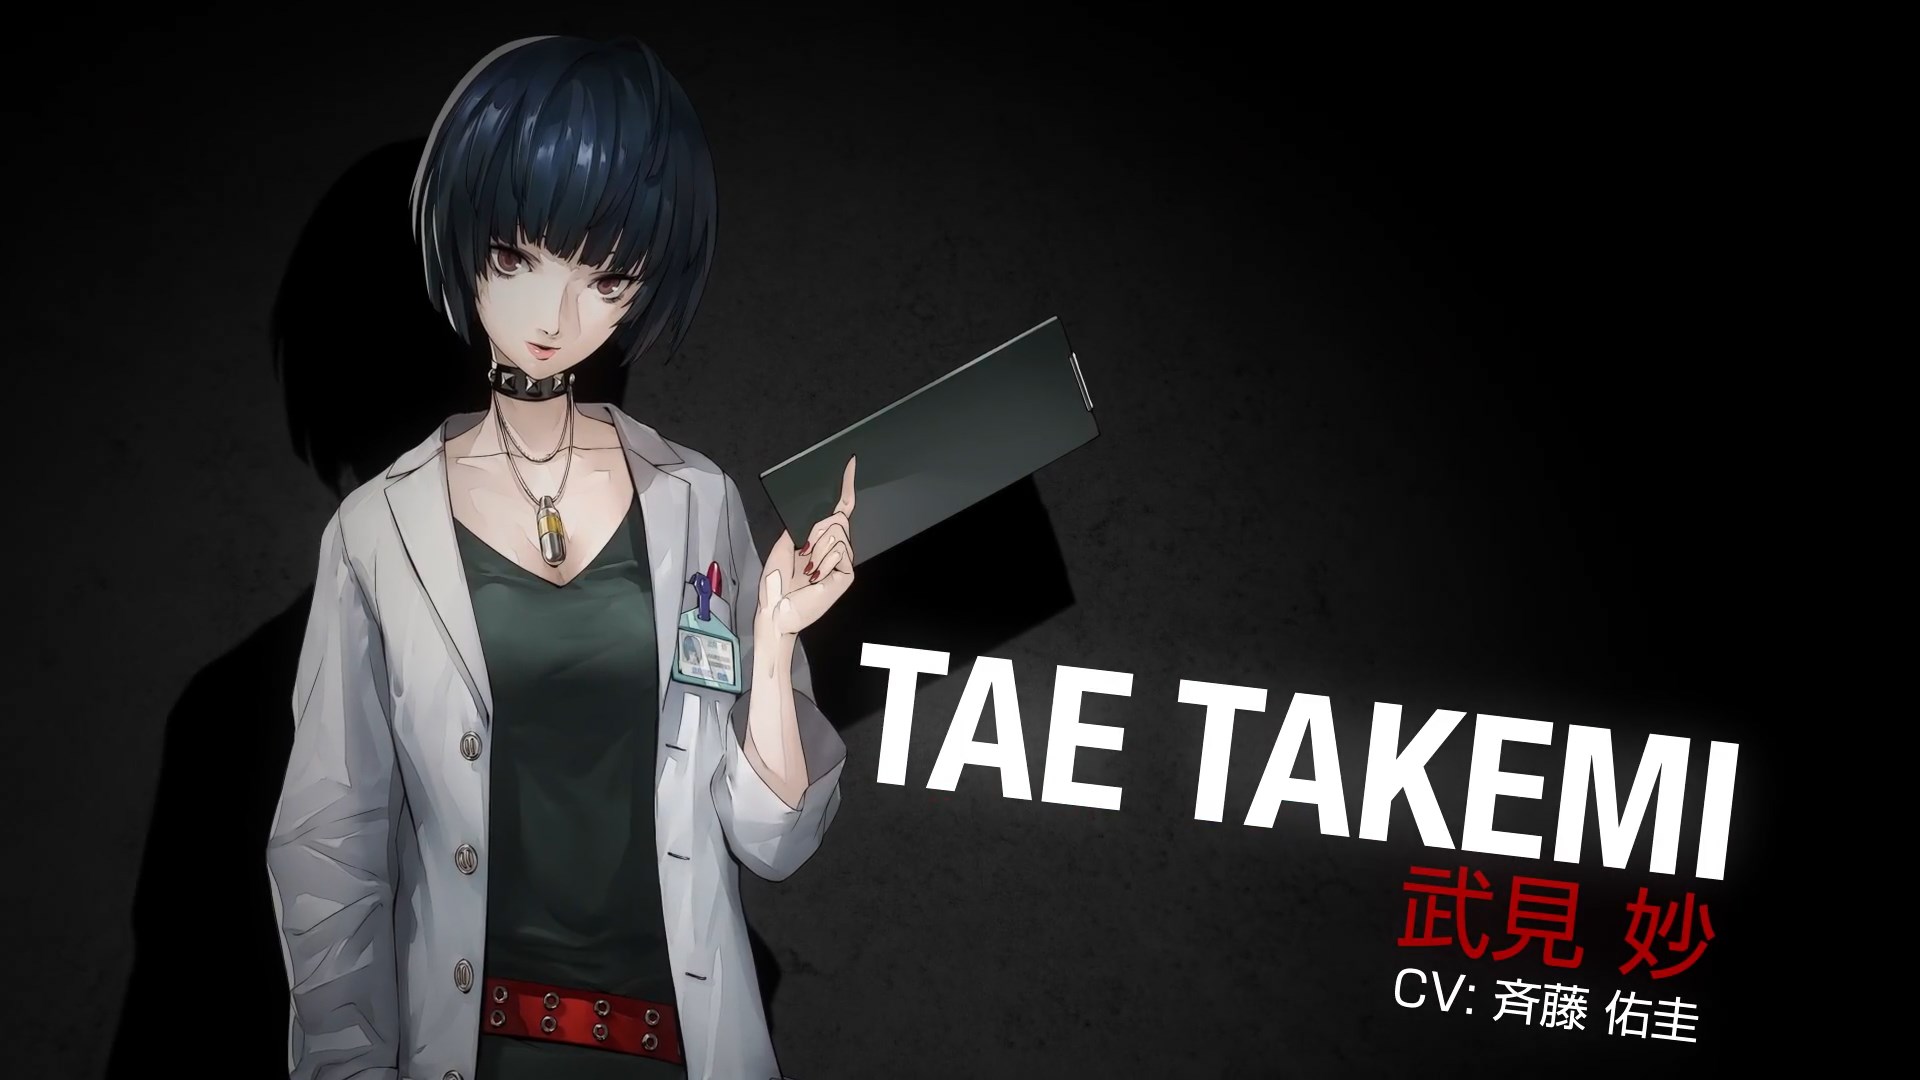 Persona 5 - Tae Takemi